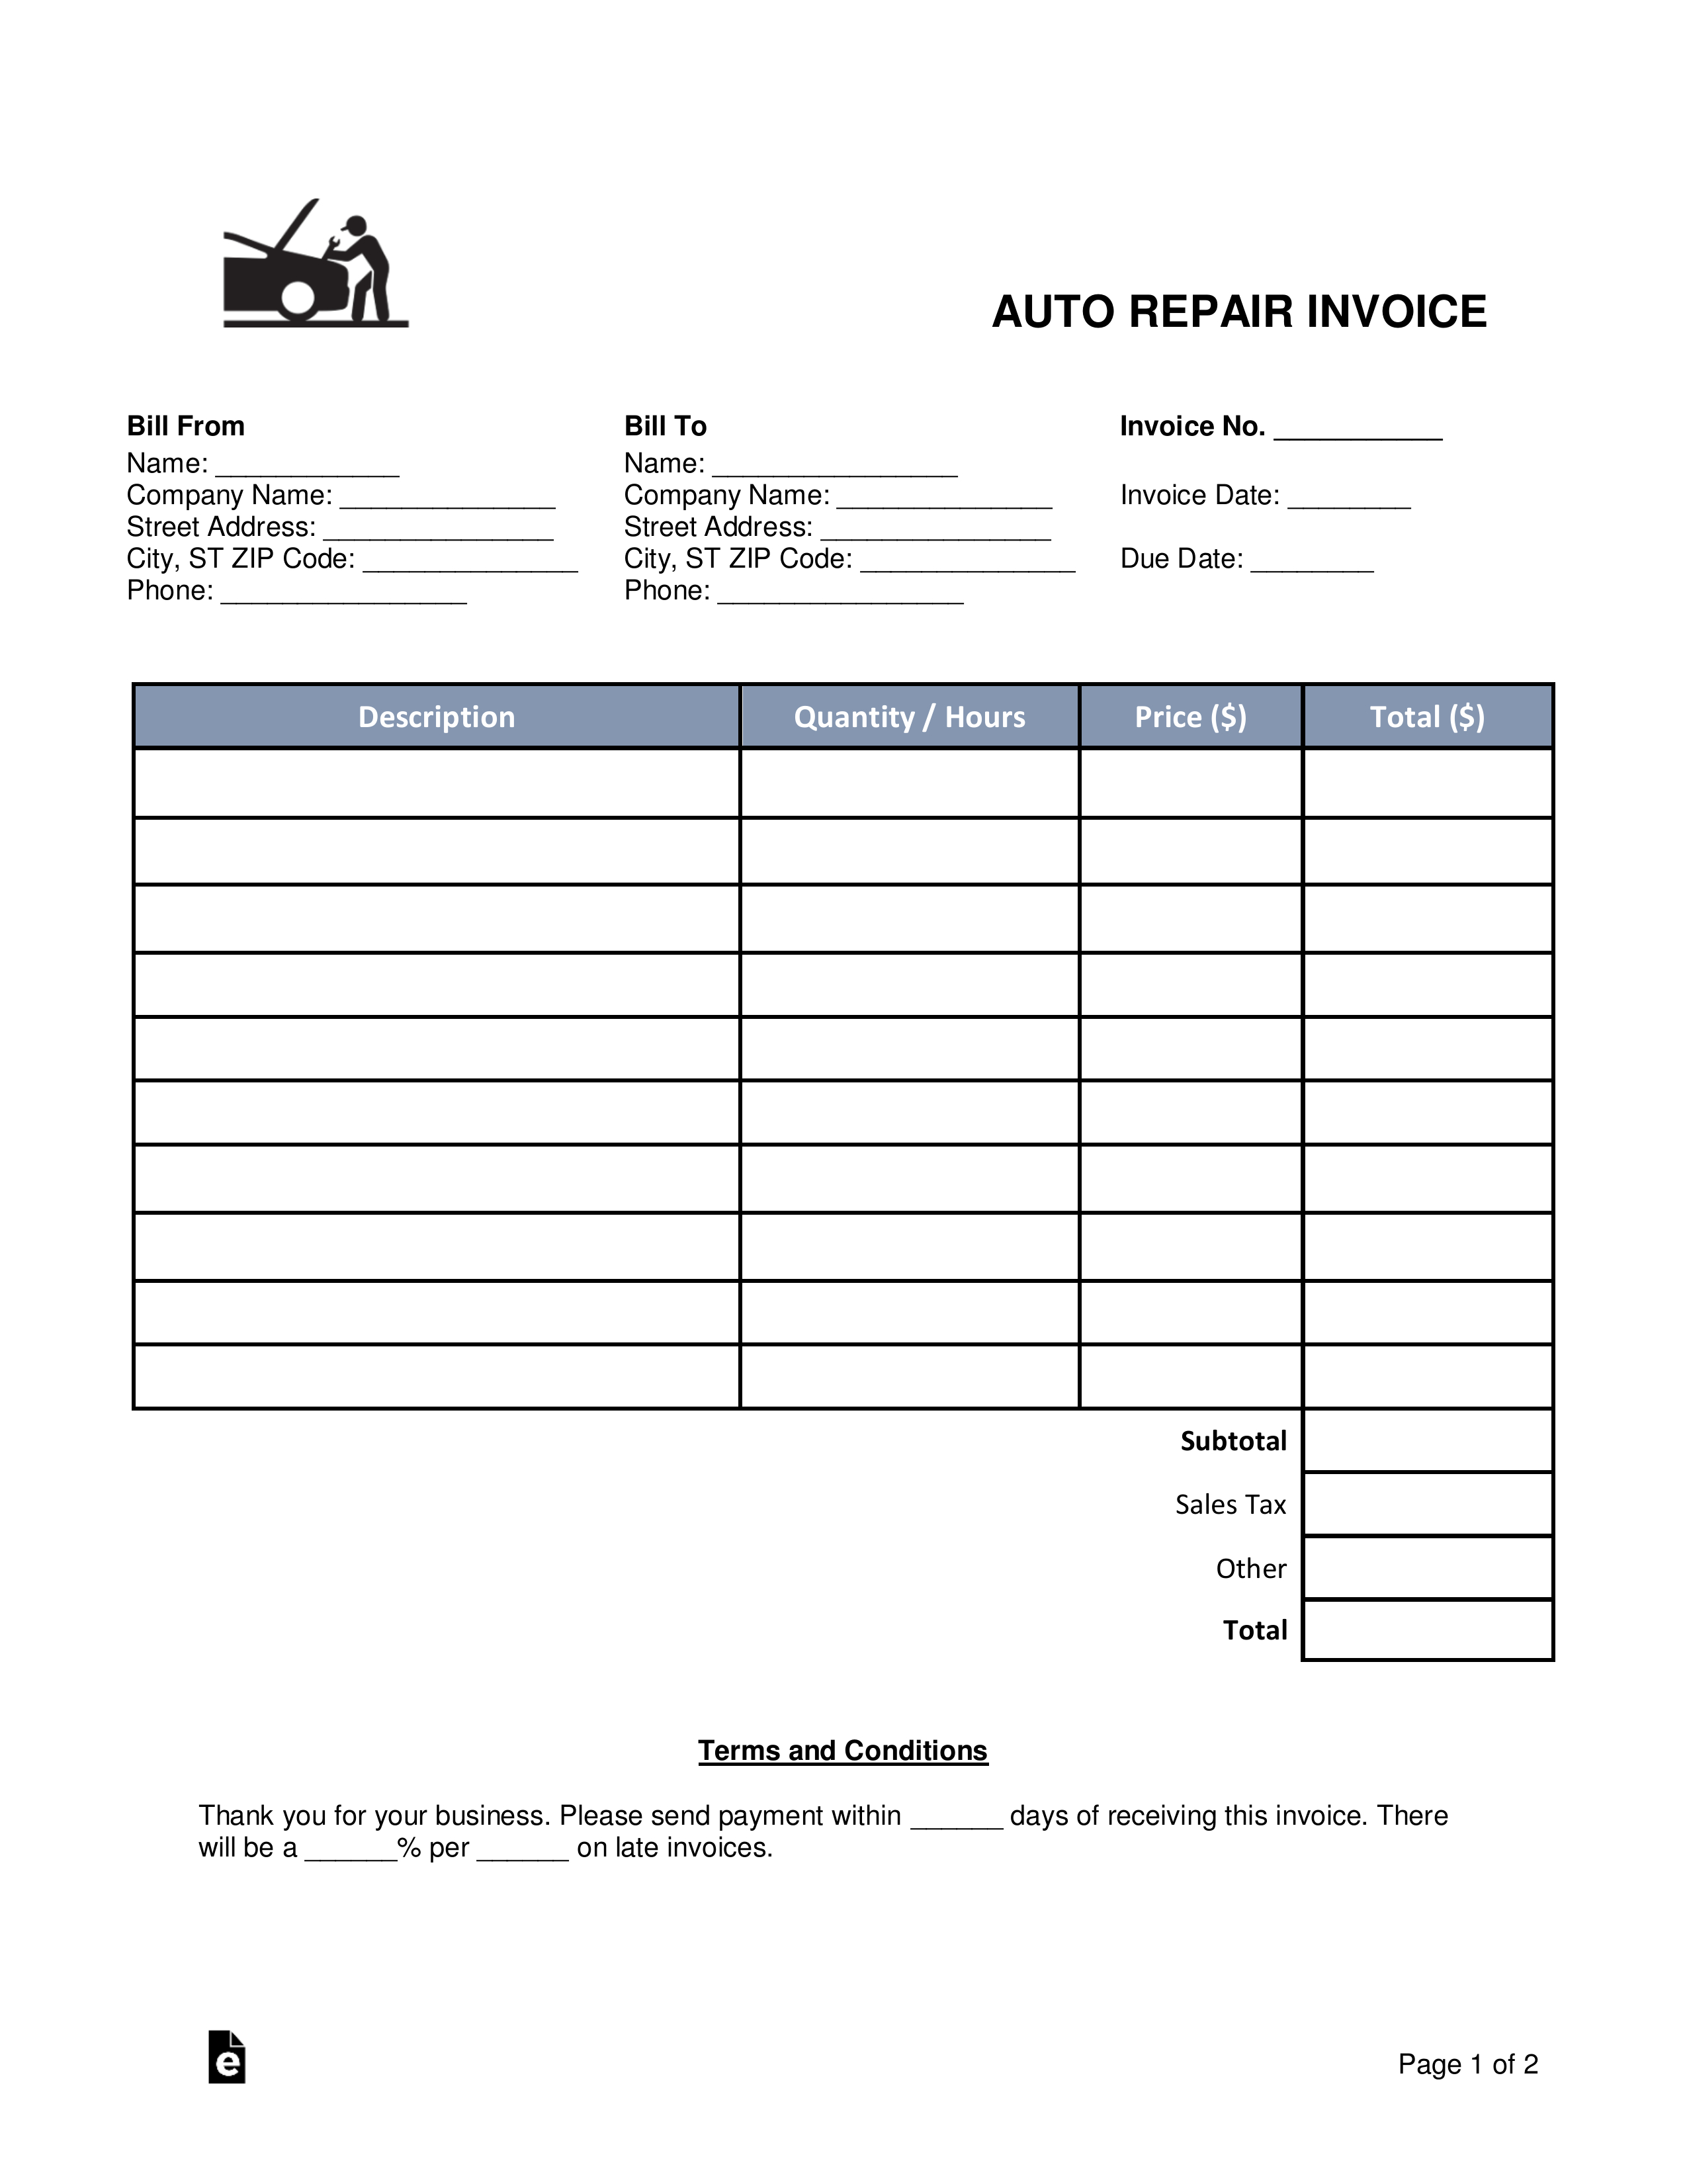 Free Auto Body (Mechanic) Invoice Template - Word | Pdf within Auto Repair Invoice Template Word